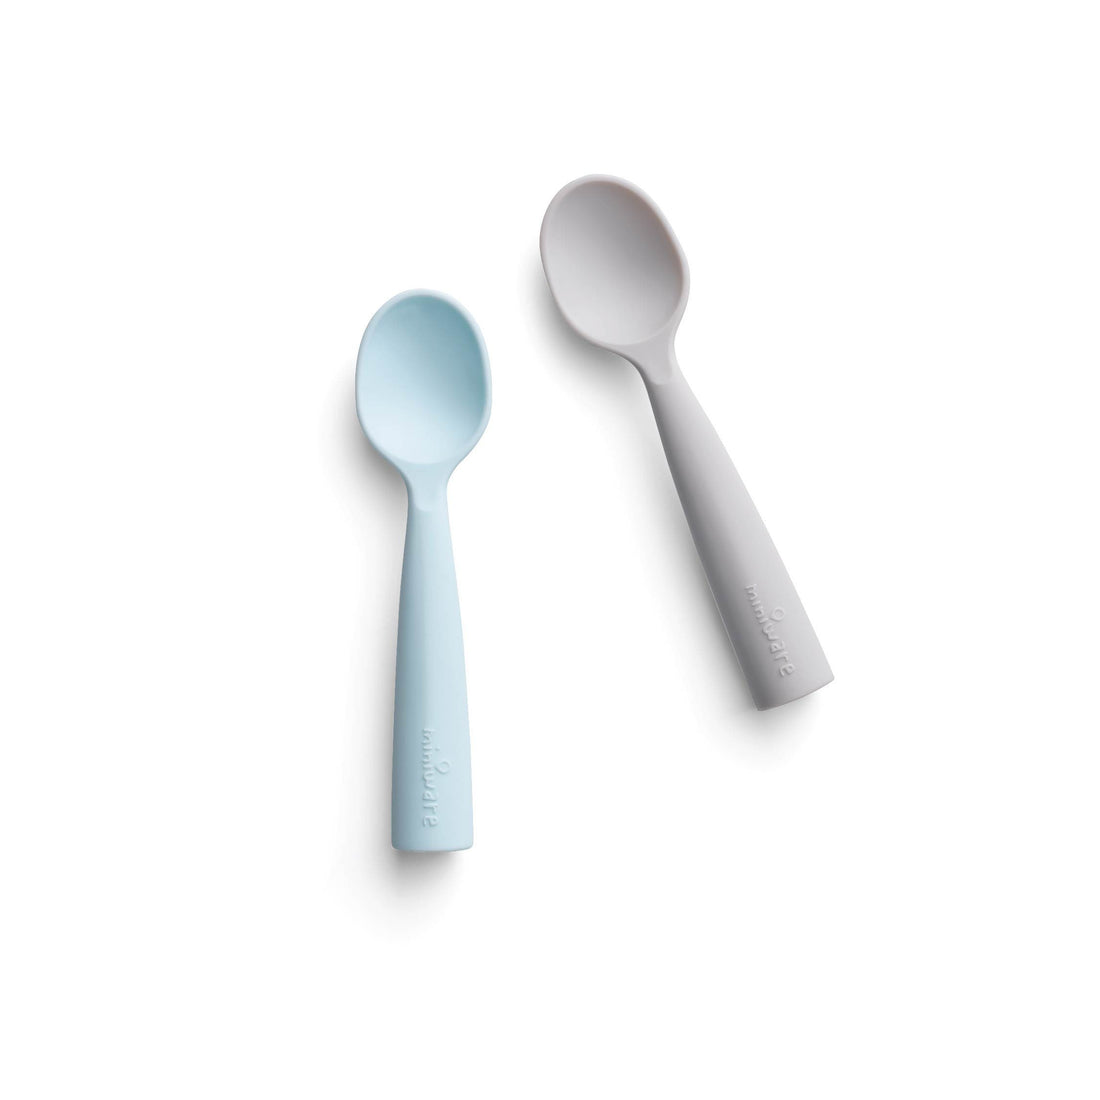 miniware-silicone-spoon-set-mint-grey- (1)